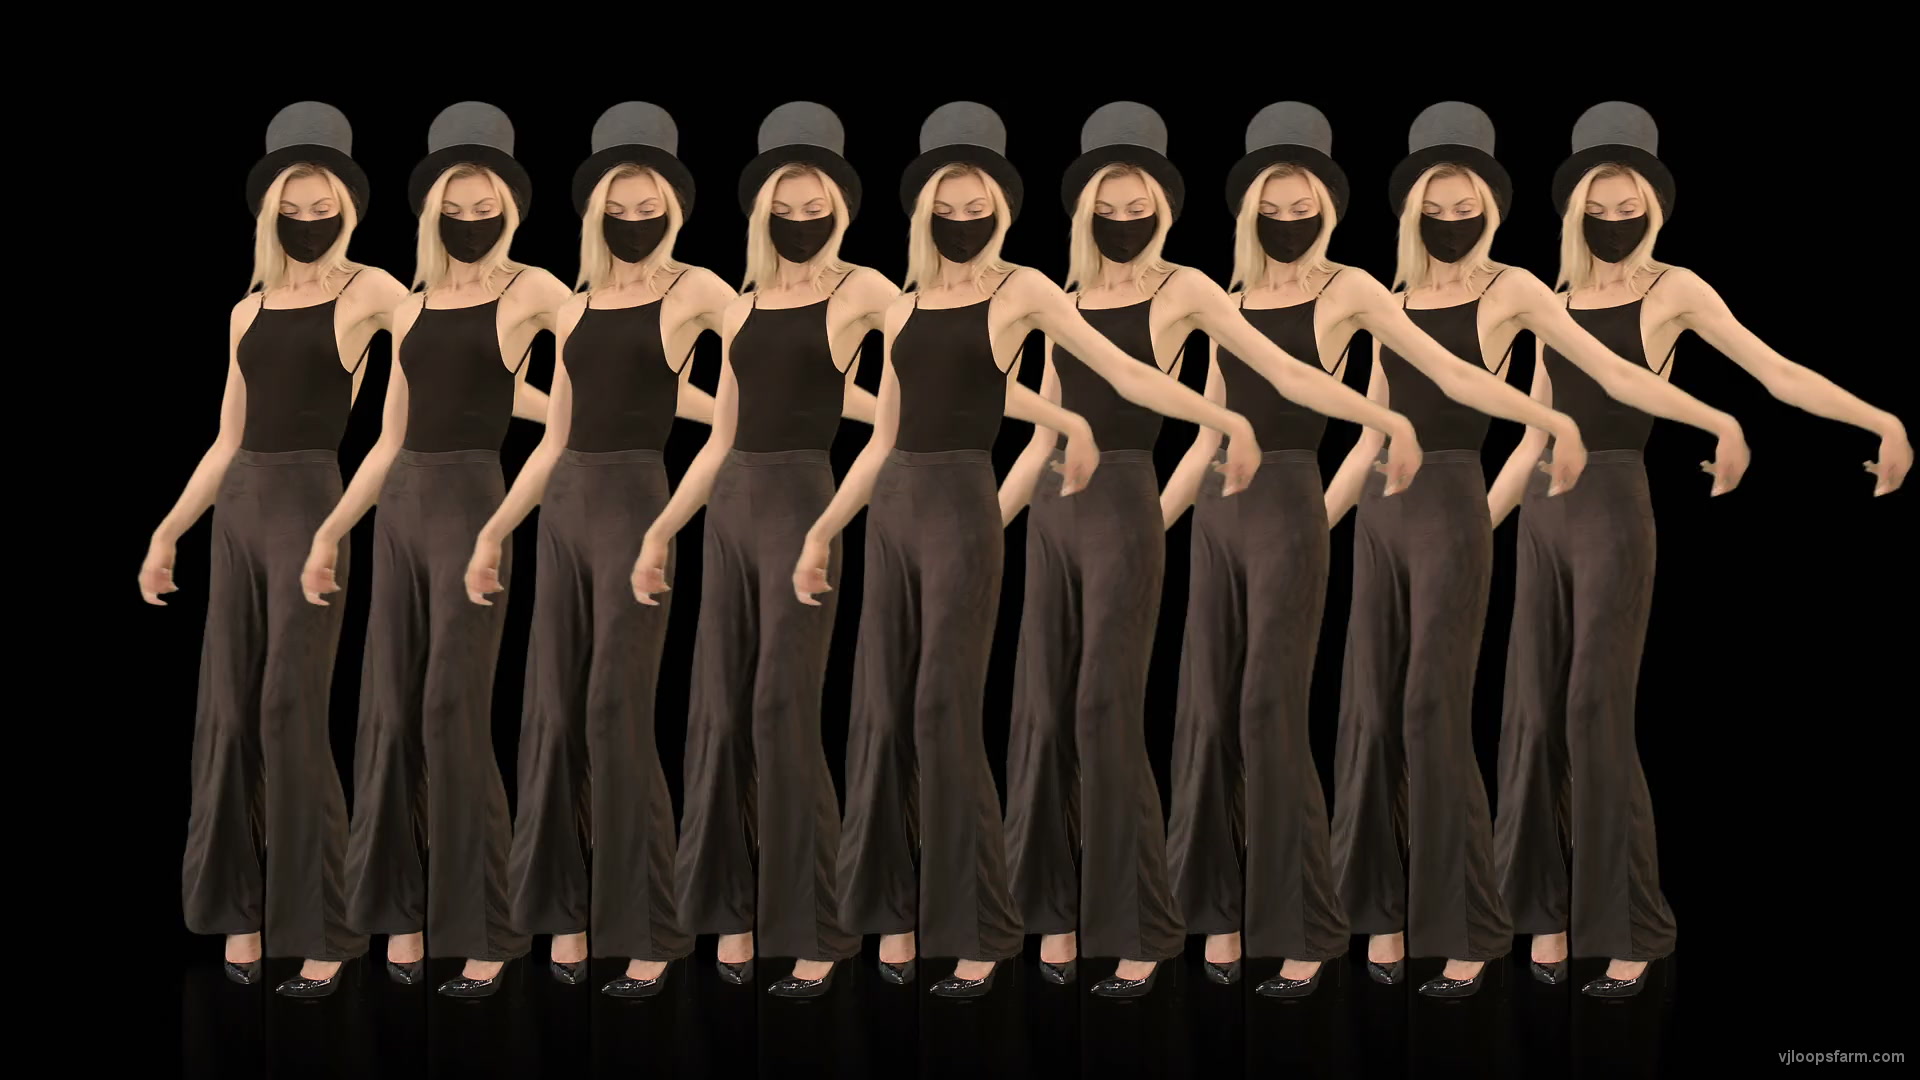 Beauty Blonde Girl Team in Covid-19 black mask dancing on black background 4K Video VJ Footage